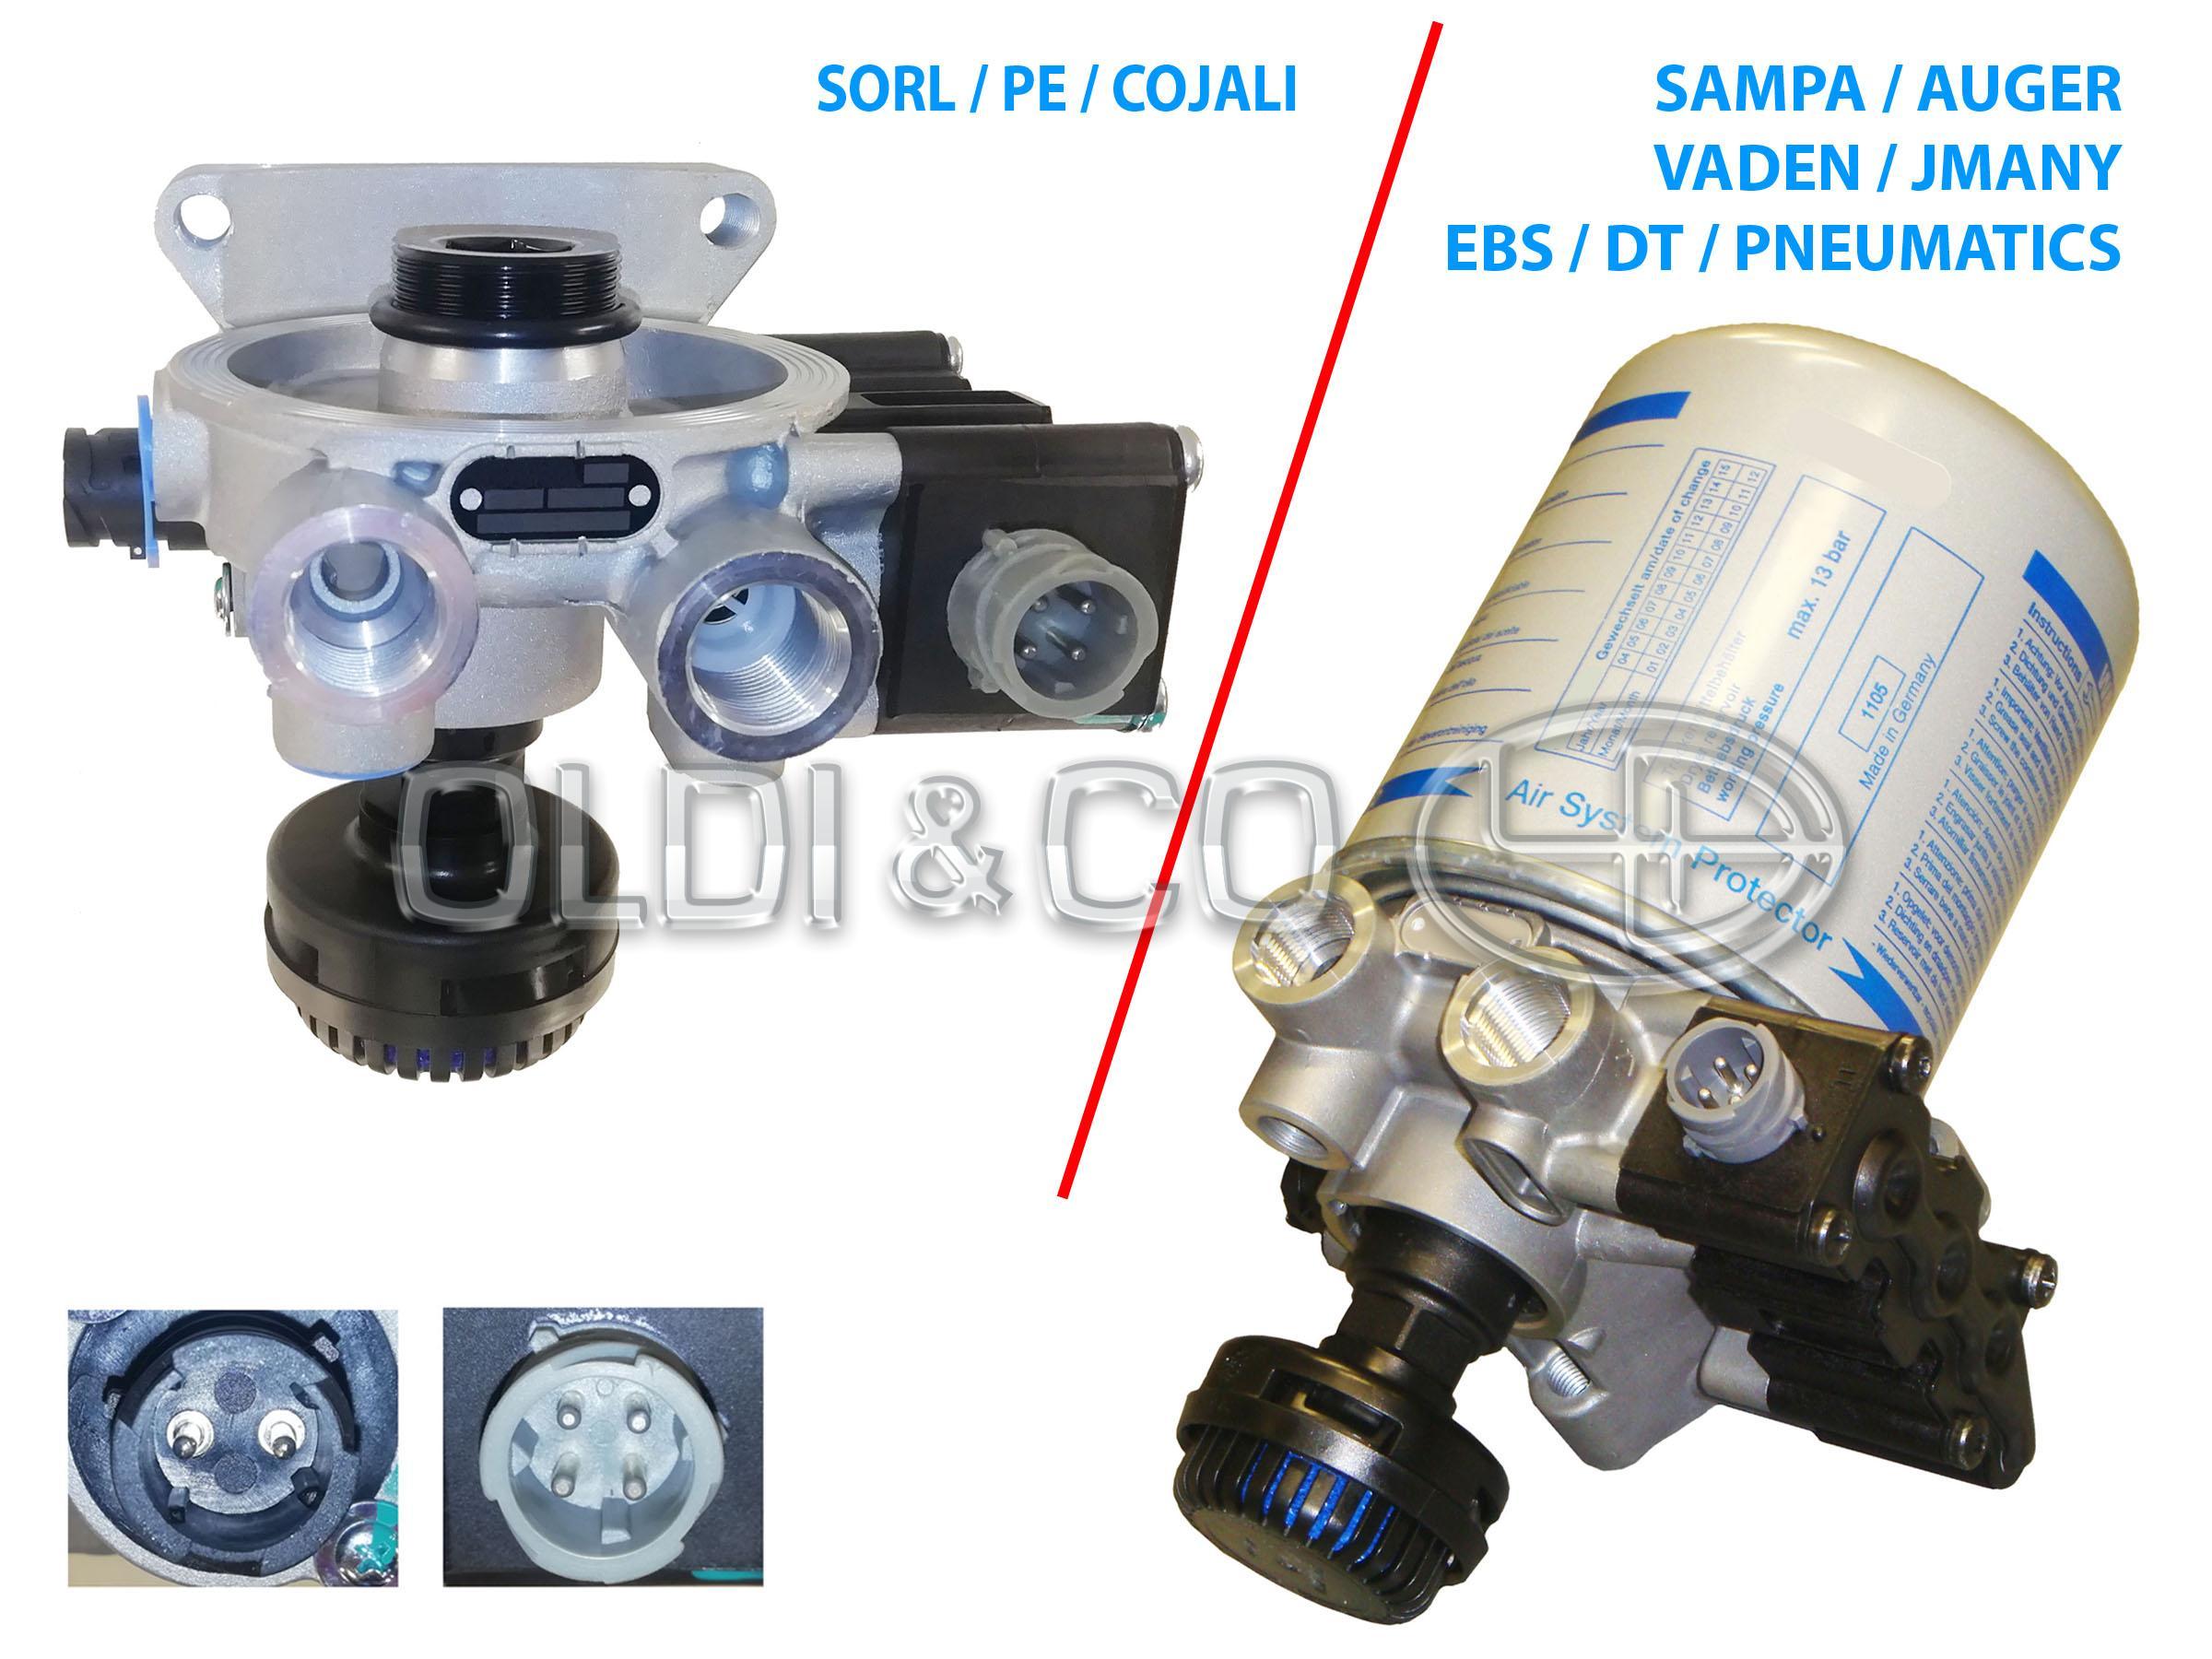 23.001.17547 Pneumatic system / valves → Air dryer